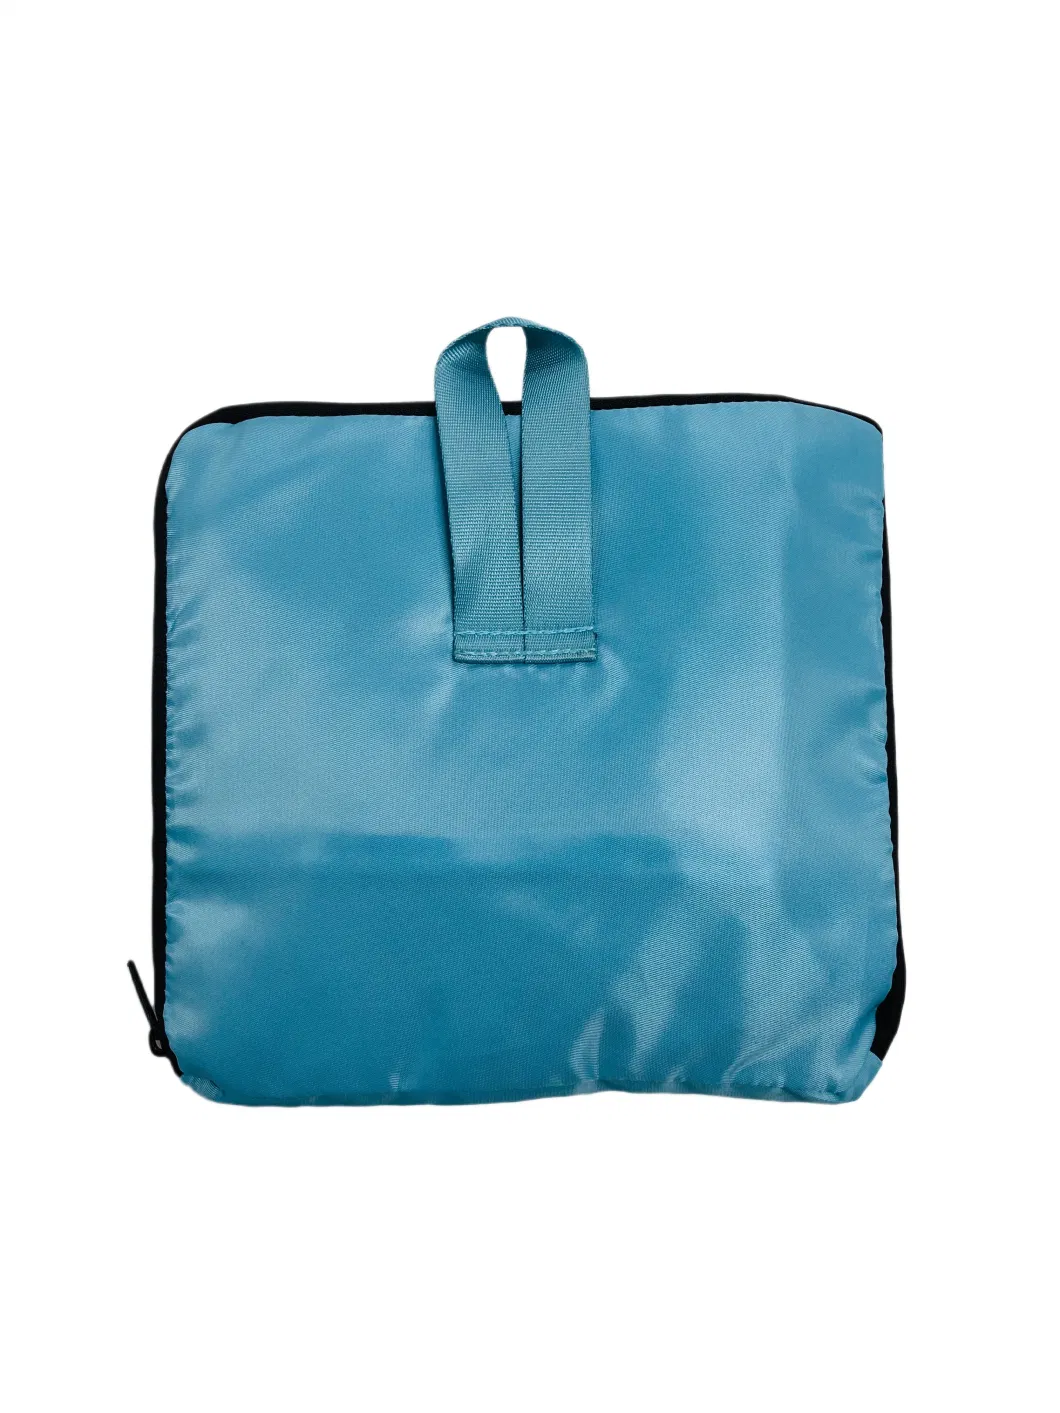 Custom Convenient Large Capacity Waterproof Duffel Bag for Travelling